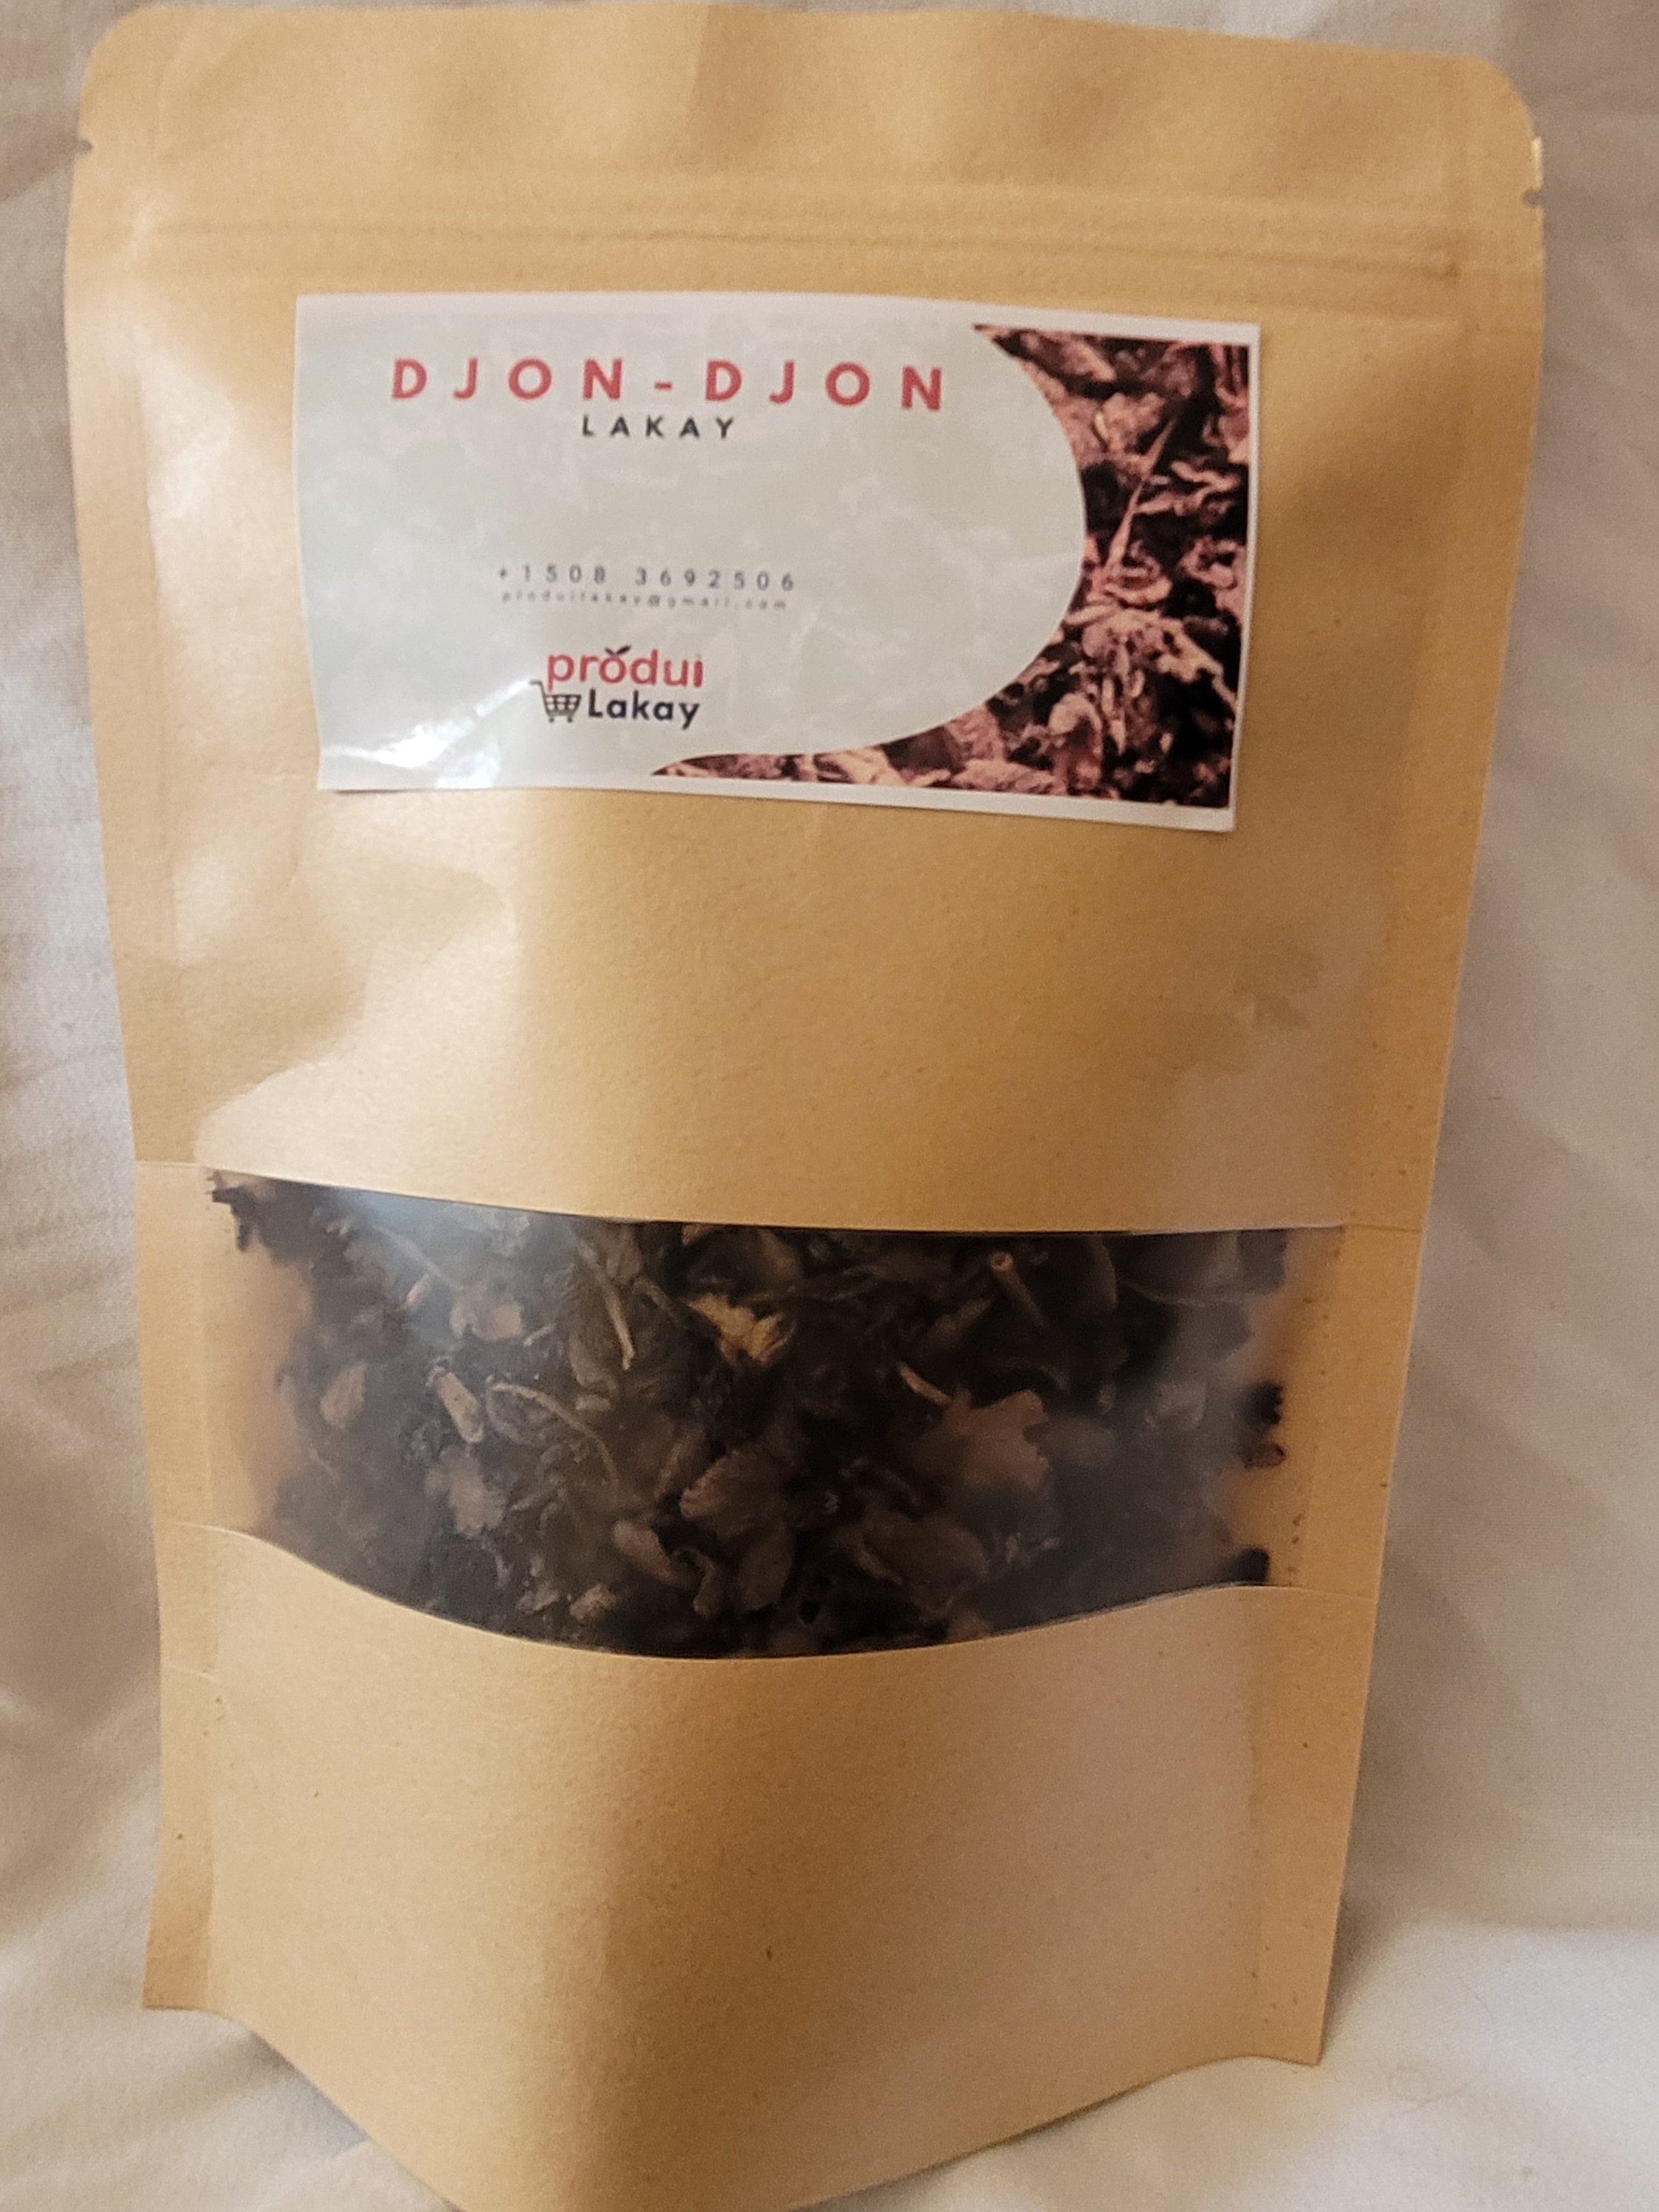  Djon Djon - Haitian Black Mushroom : Grocery & Gourmet